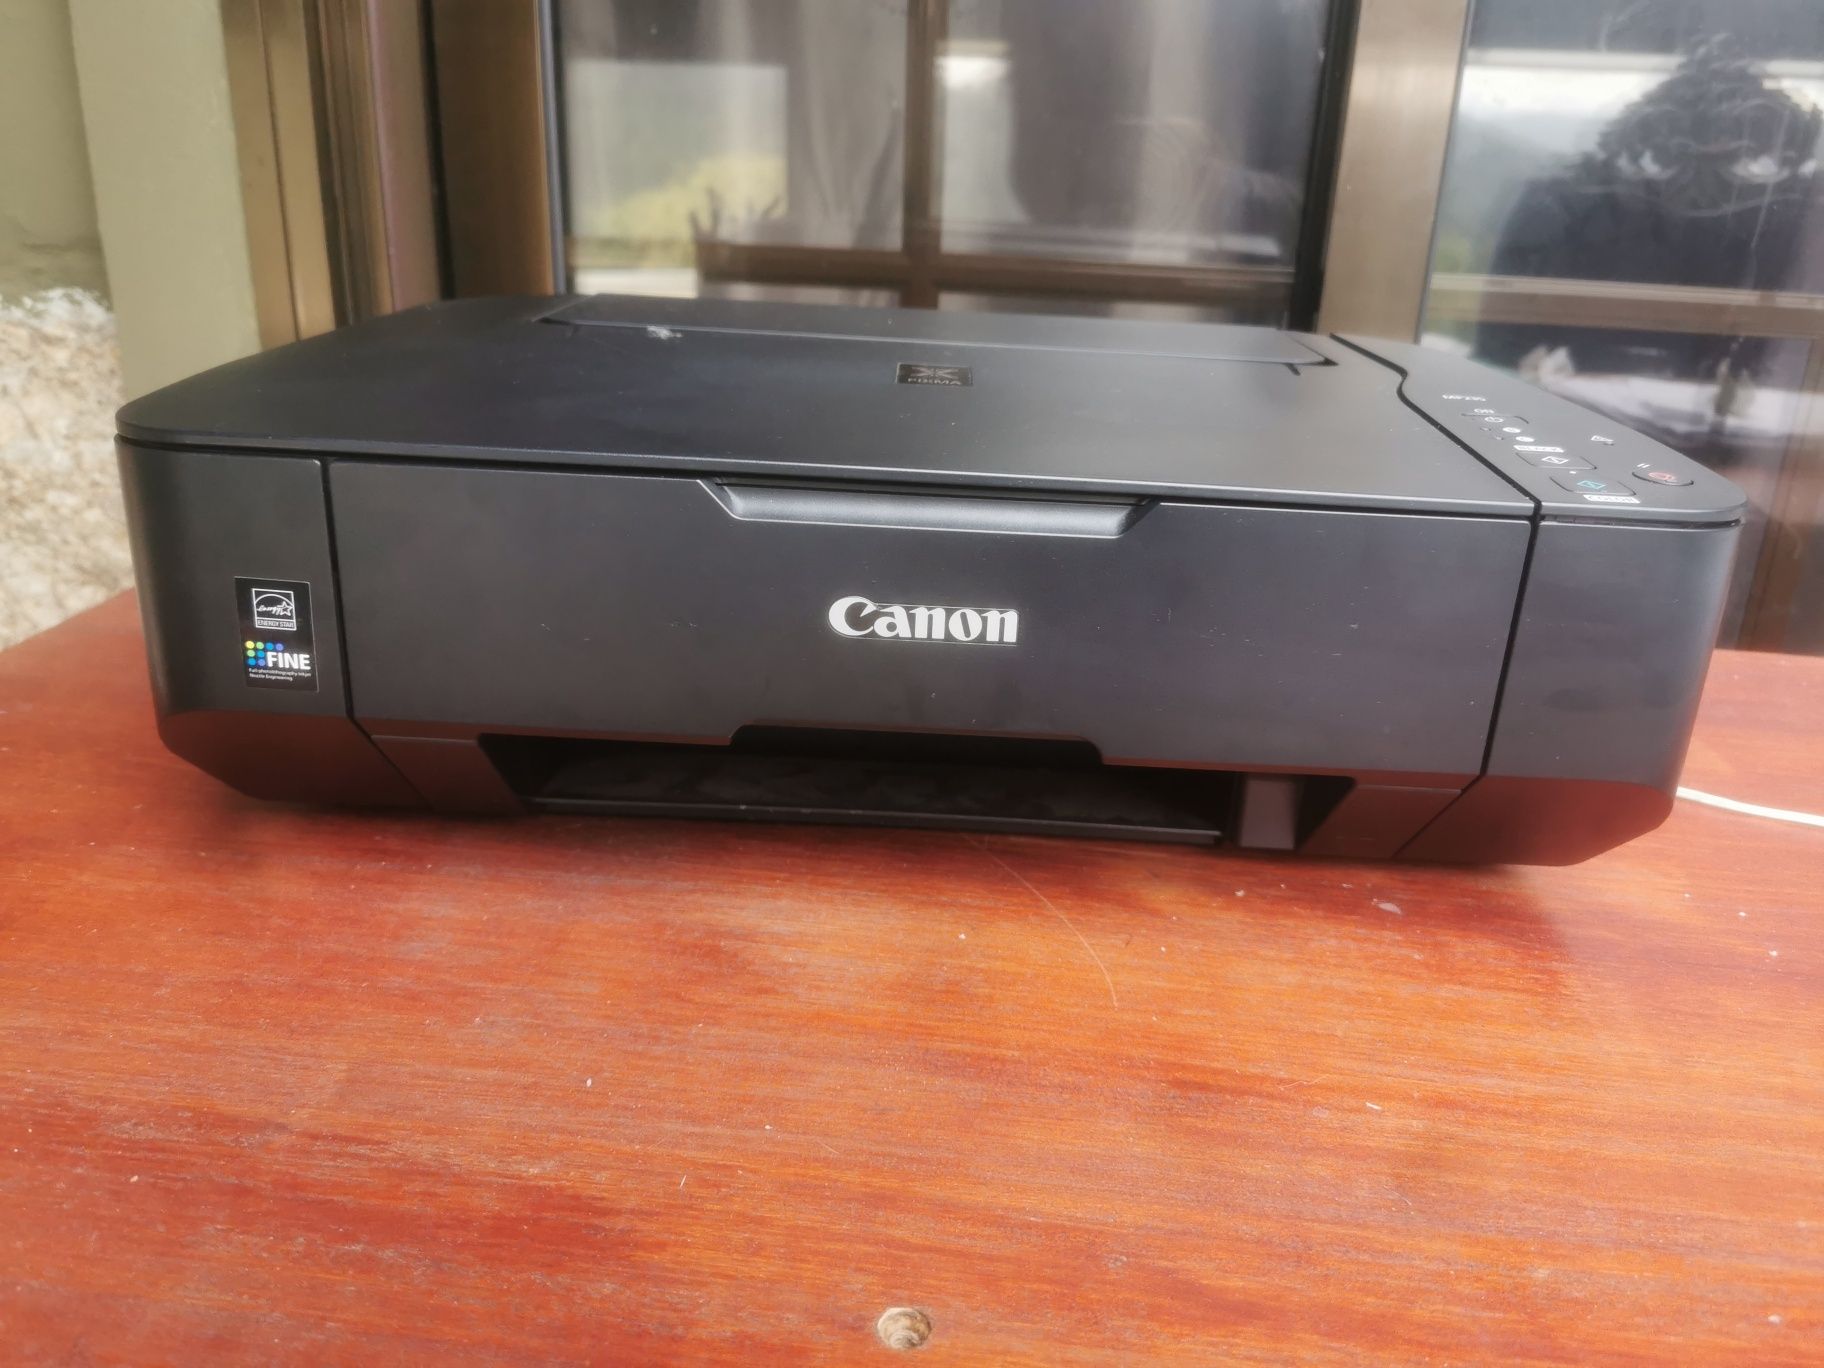 Impressora Canon Pixma